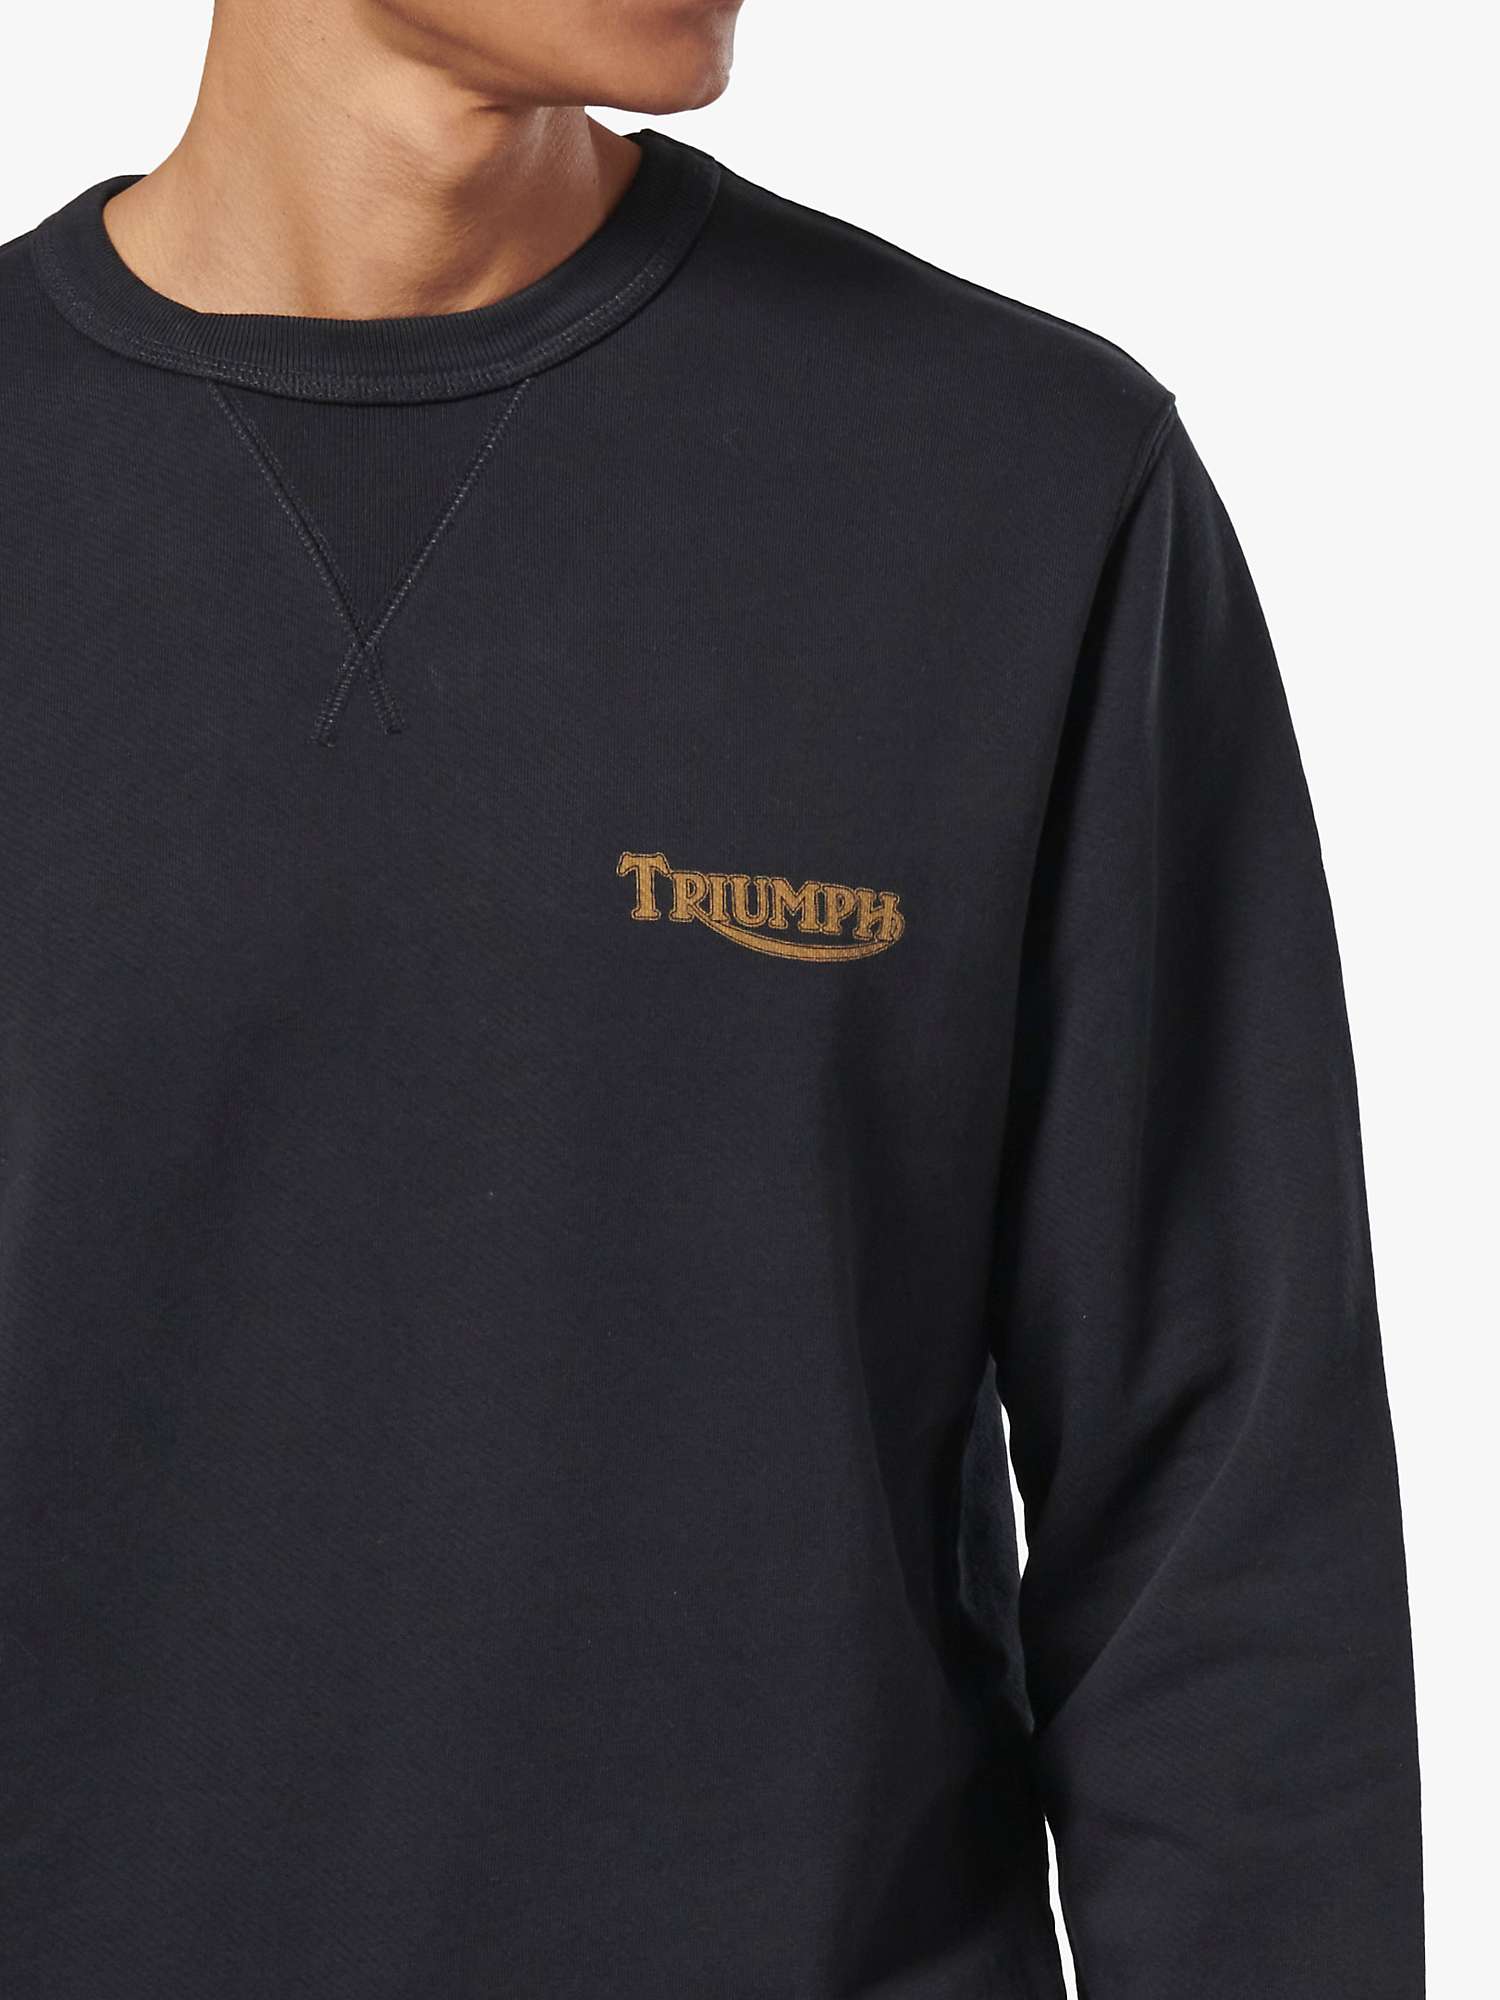 Buy Triumph Motorcycles Circuit Sweatshirt Online at johnlewis.com